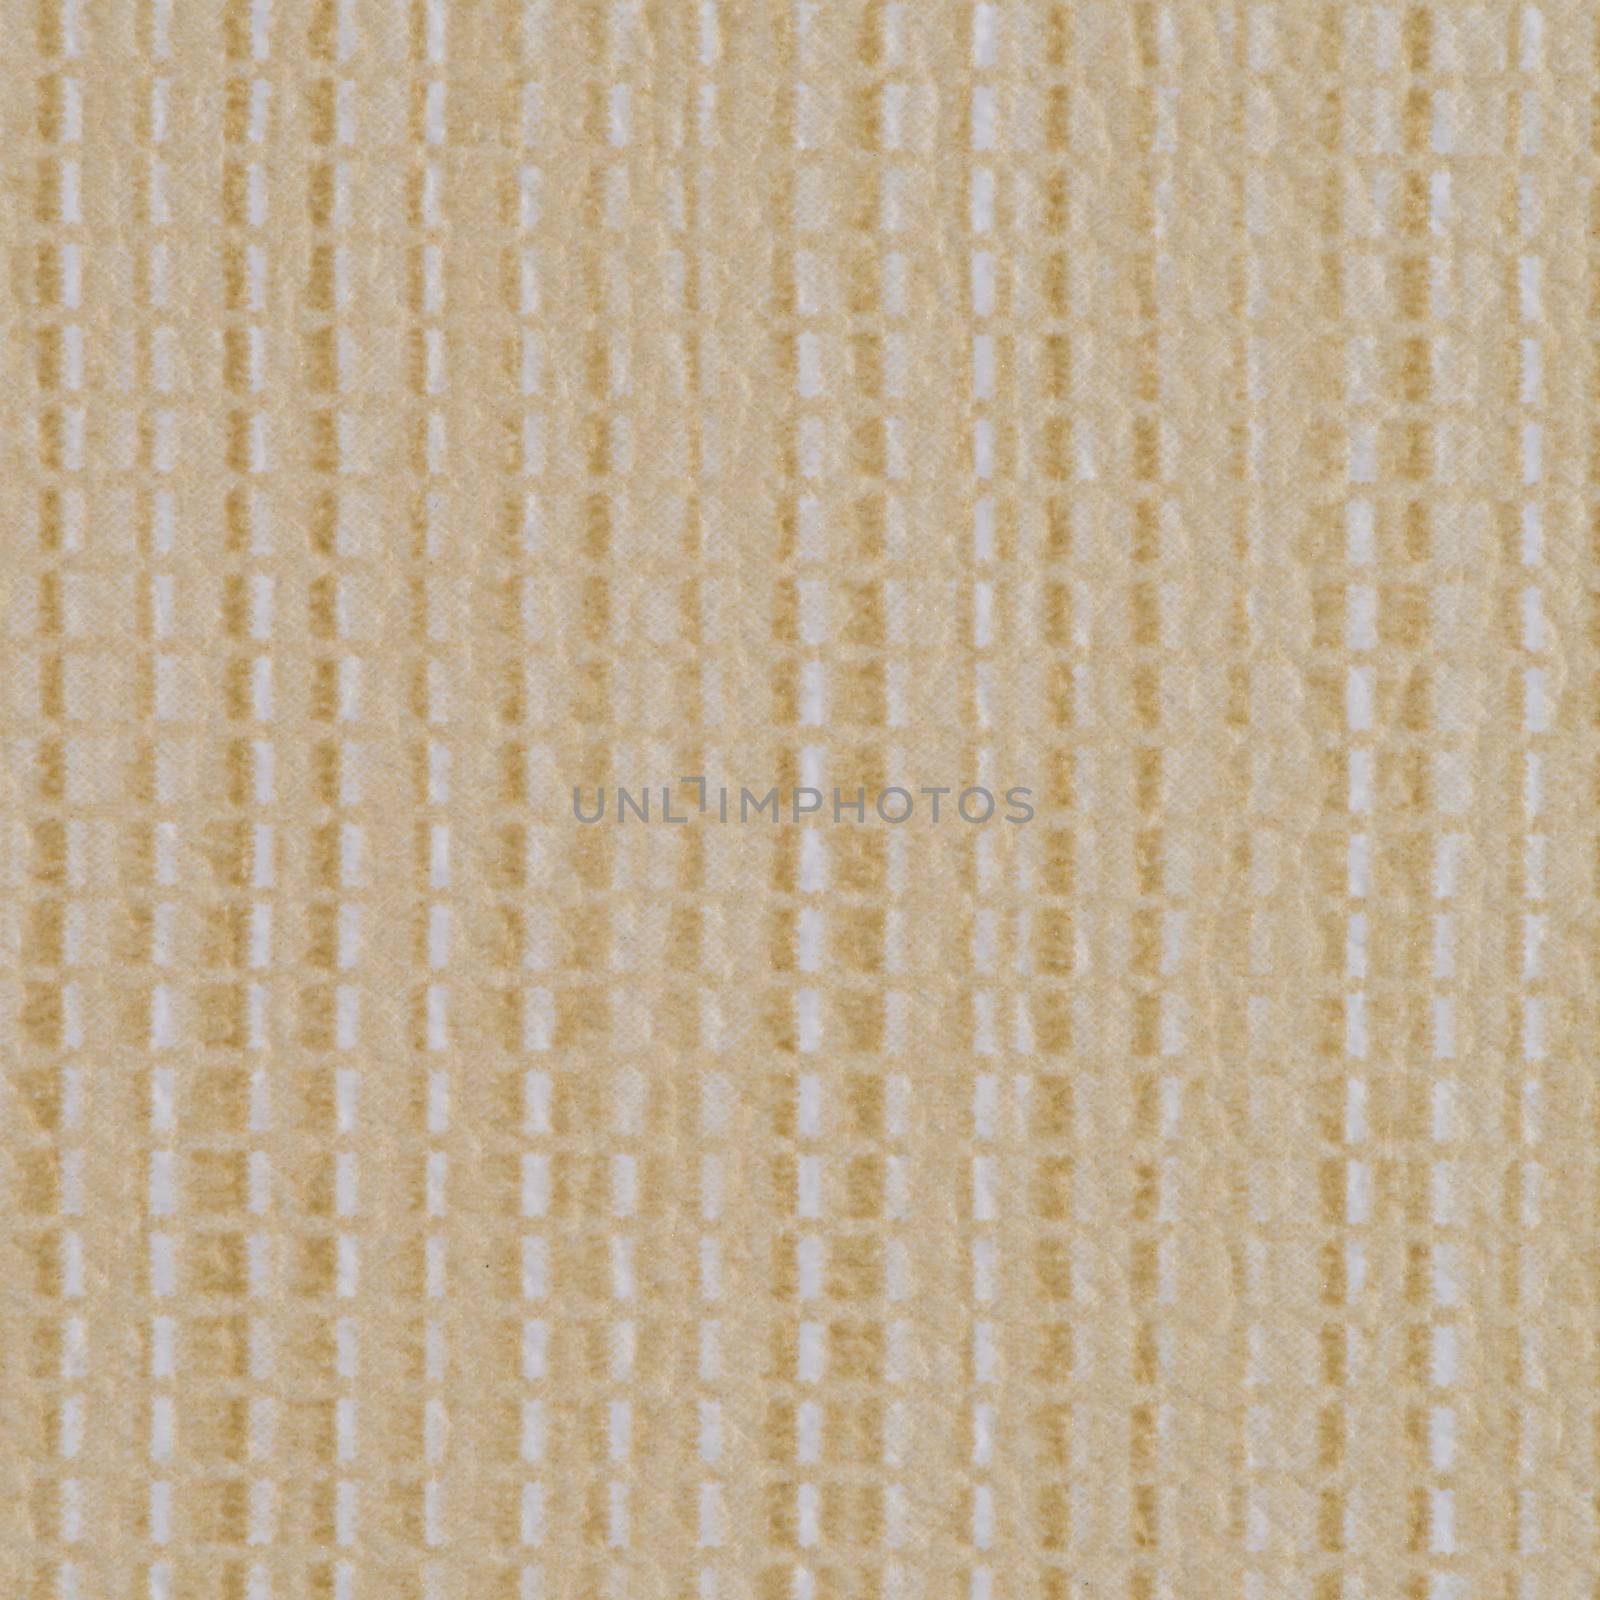 Embossed vinyl texture closeup texture background.